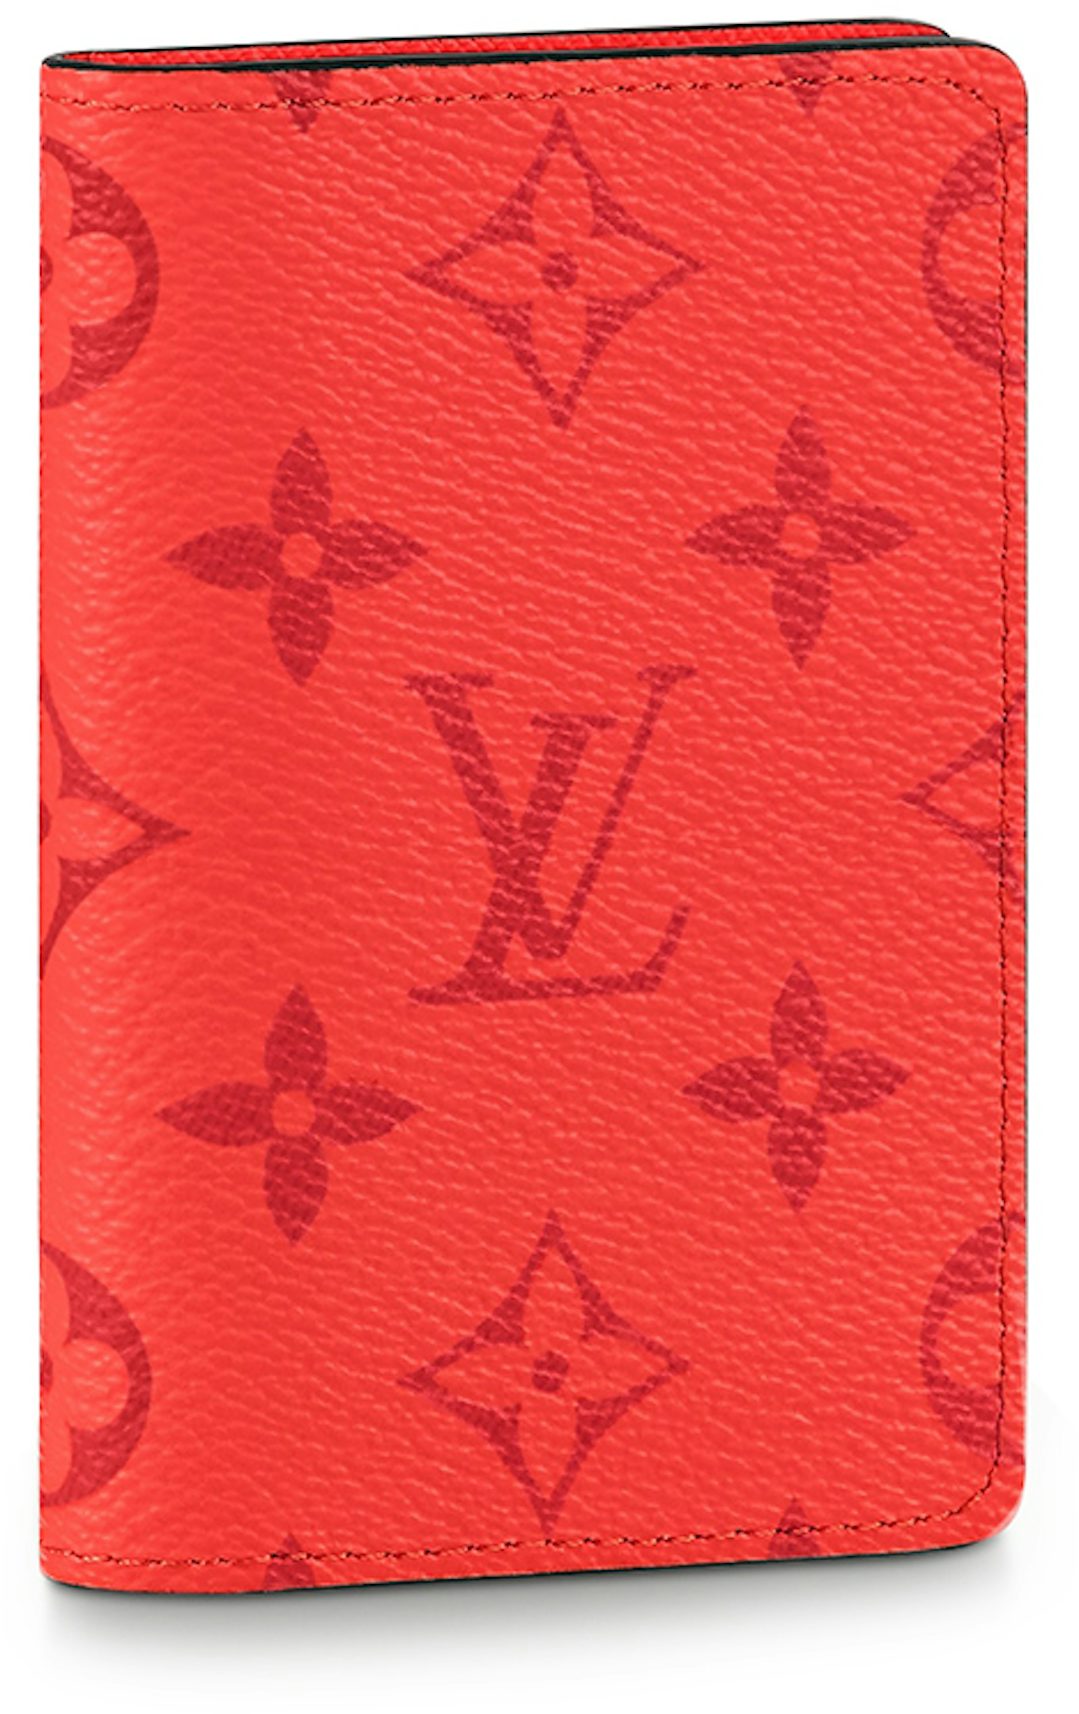 Louis Vuitton Pocket Organizer Monogram Red in Coated Canvas